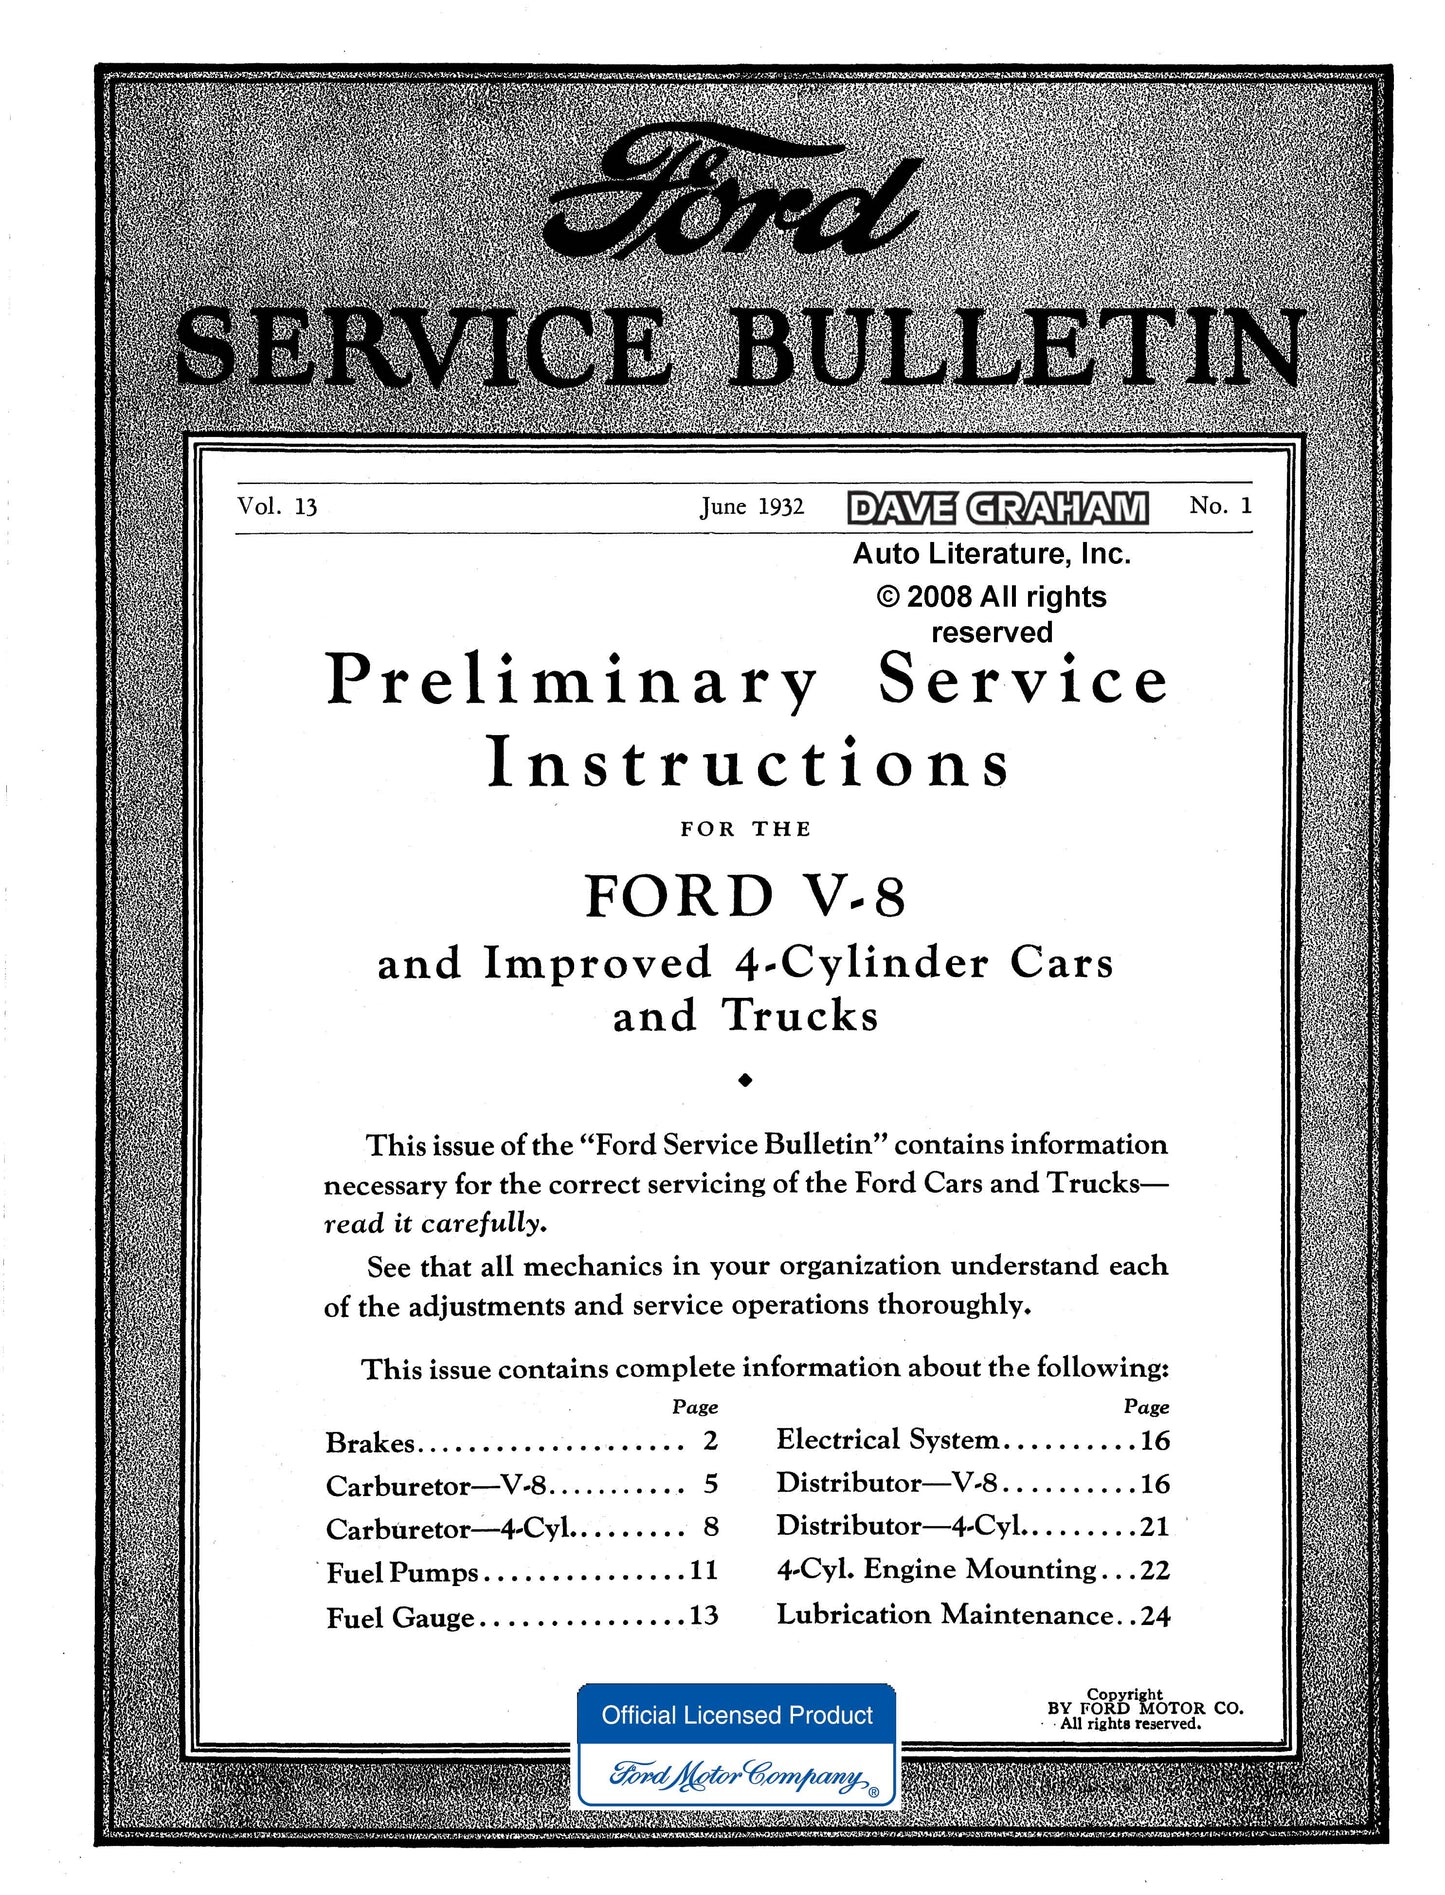 1932-1941 Ford Car & Pickup, And Mercury Car Shop Manual